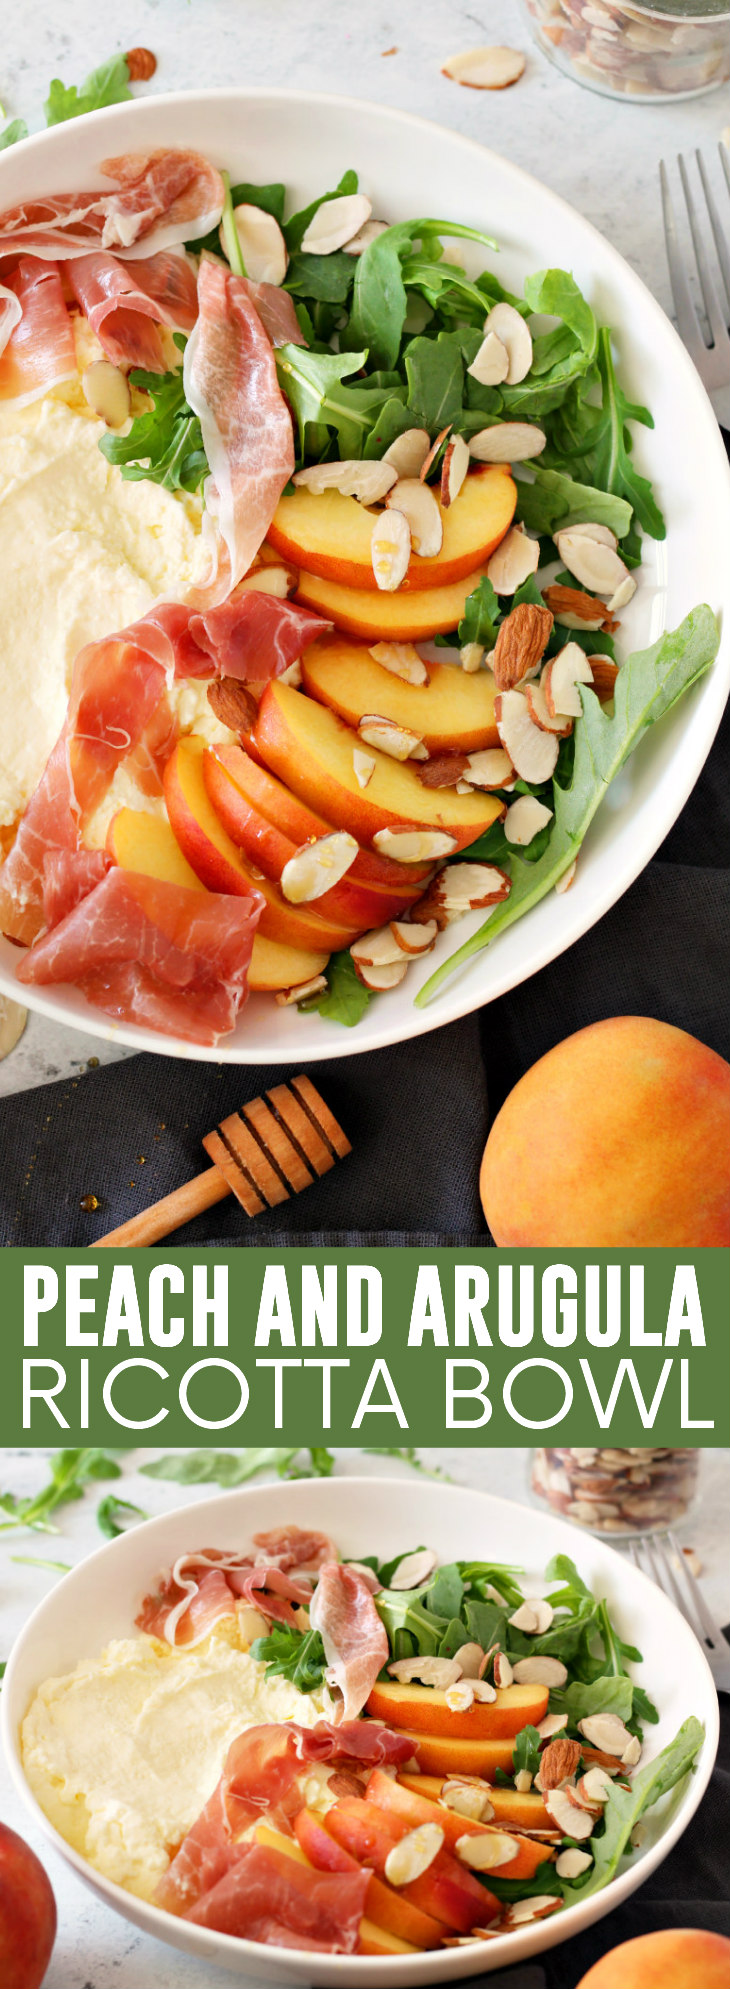 Peach and Arugula Ricotta Bowl pinnable image.